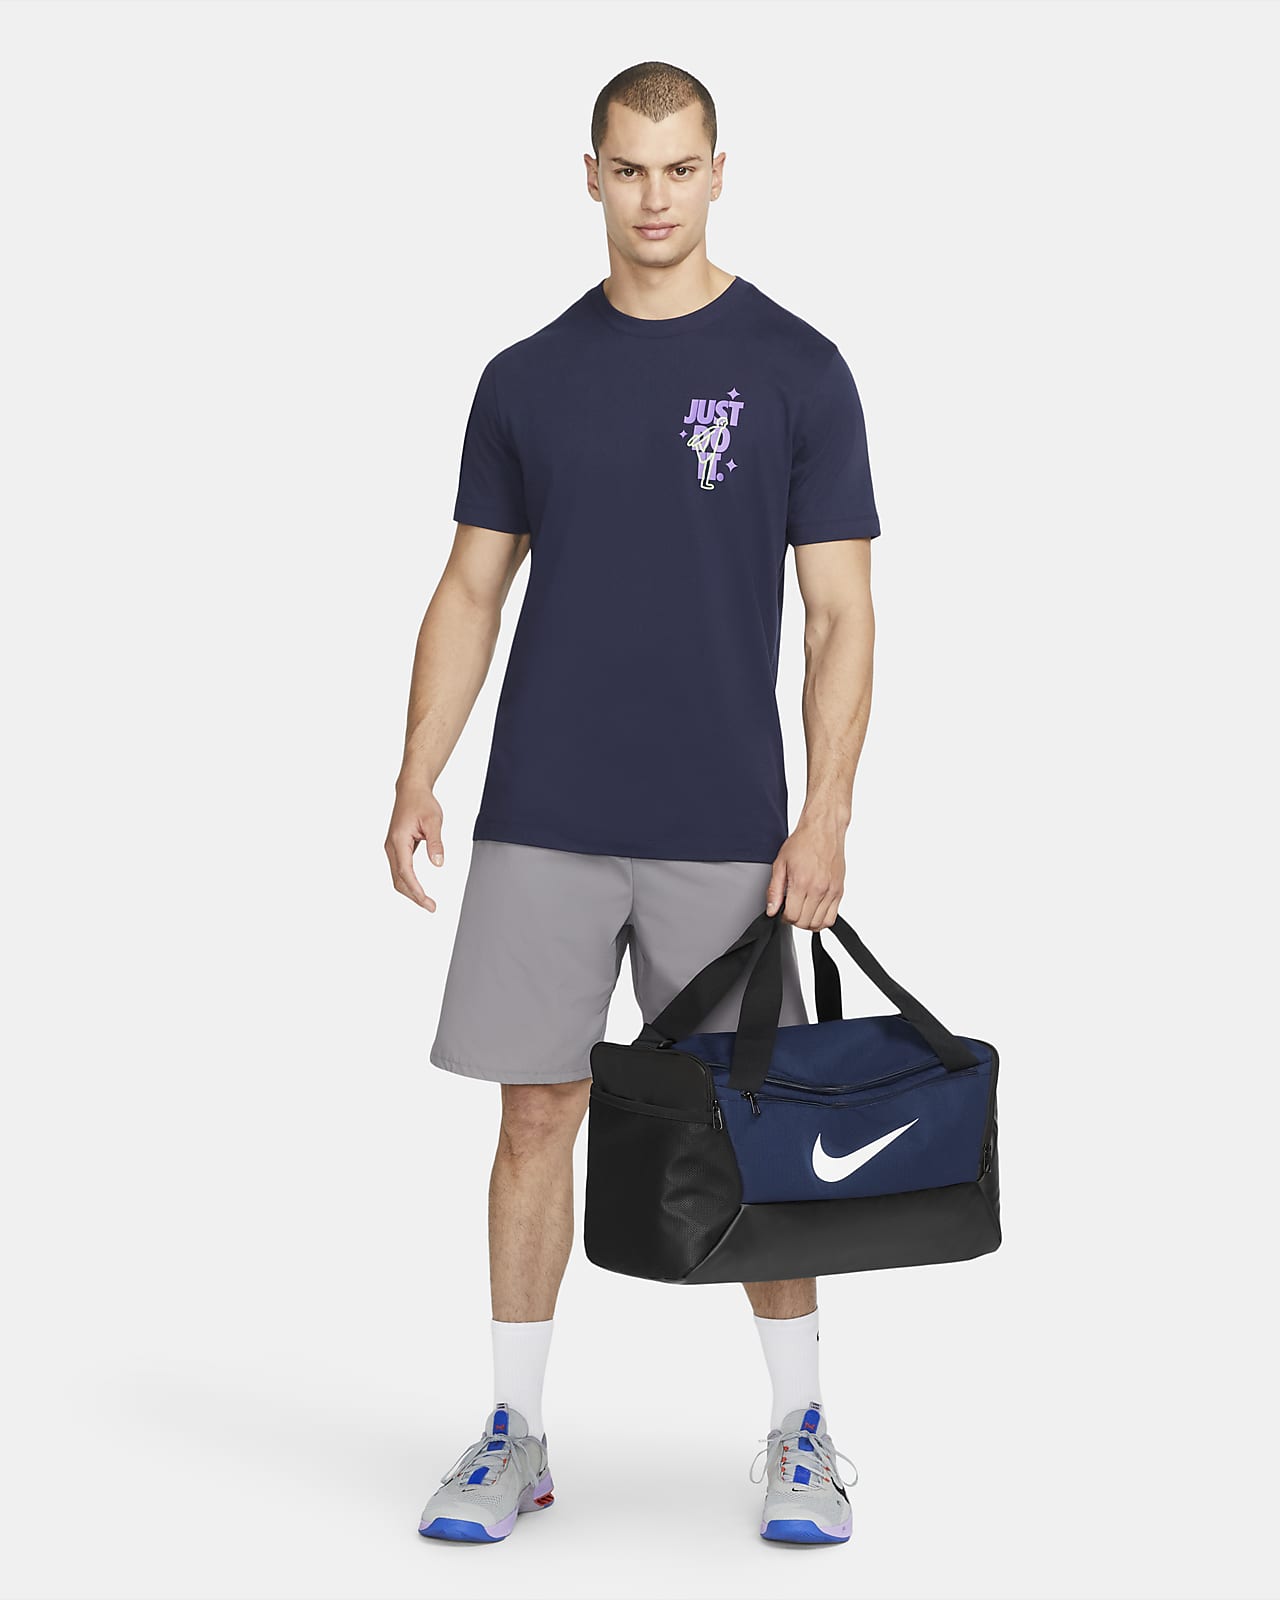 Nike Brasilia 9.5 Training Duffel Bag (Extra Small, 25L) Navy